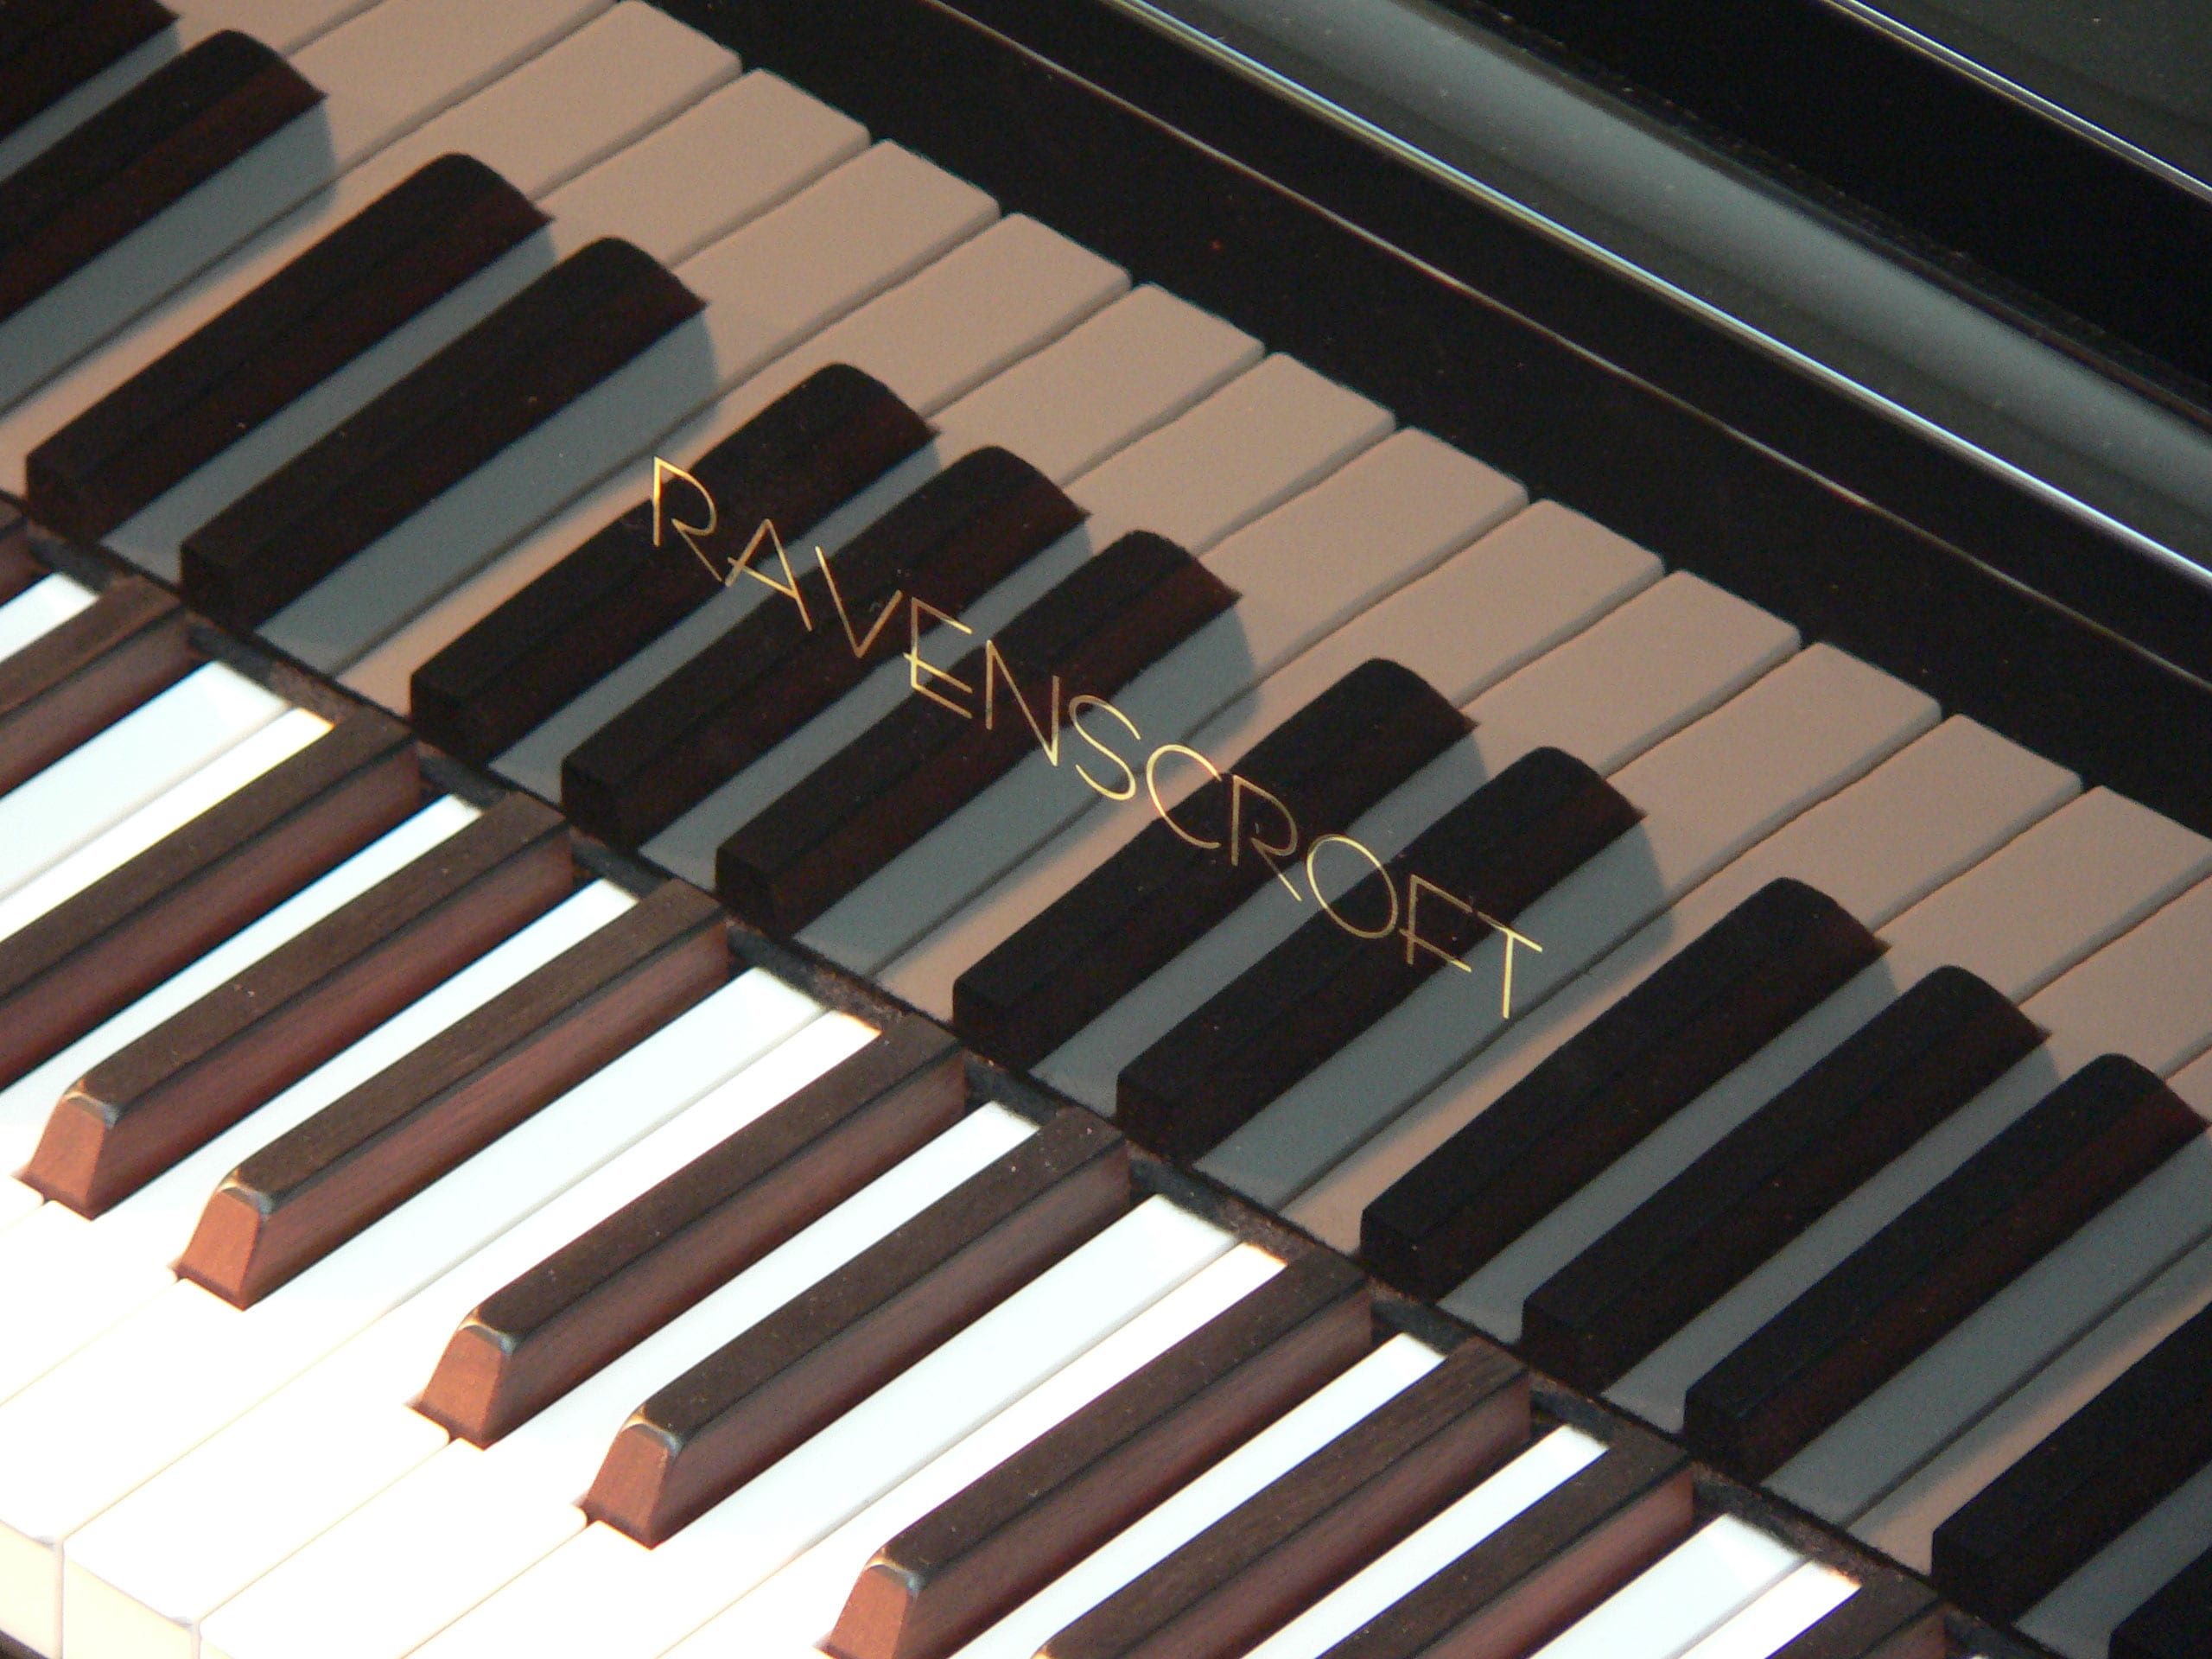 Ravenscroft Pianos